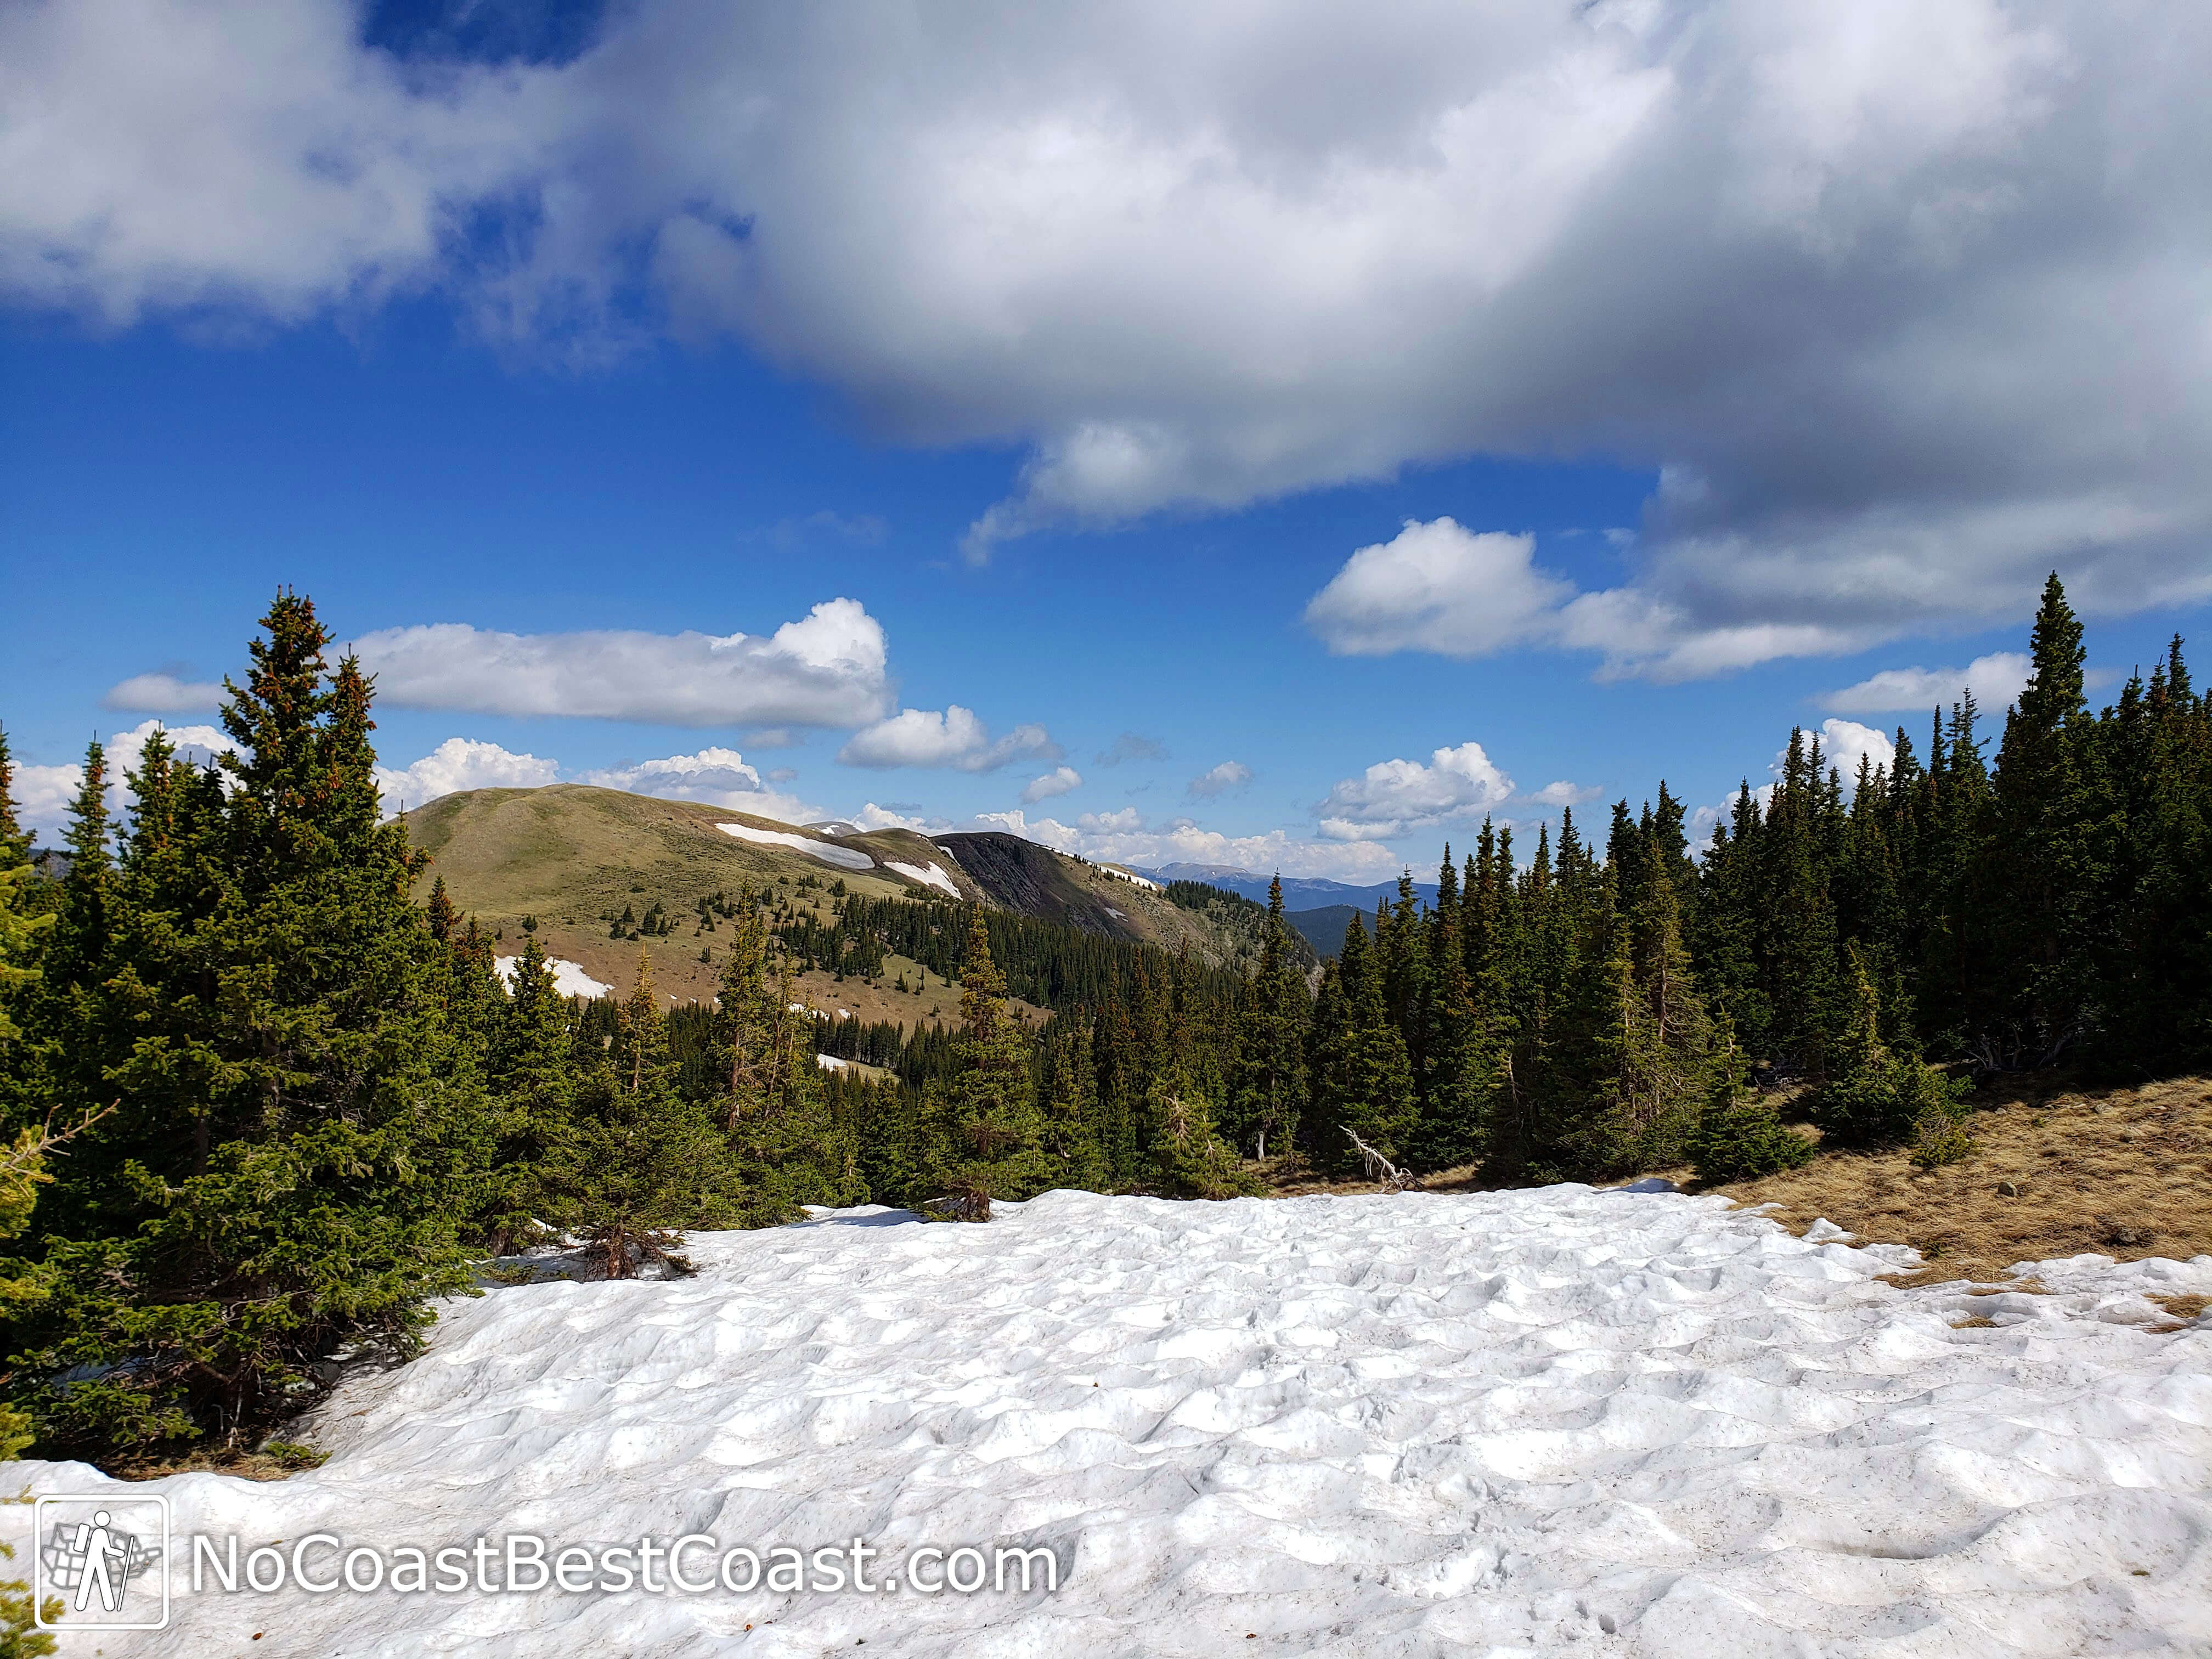 Snow covering the trail near 12,000 feet